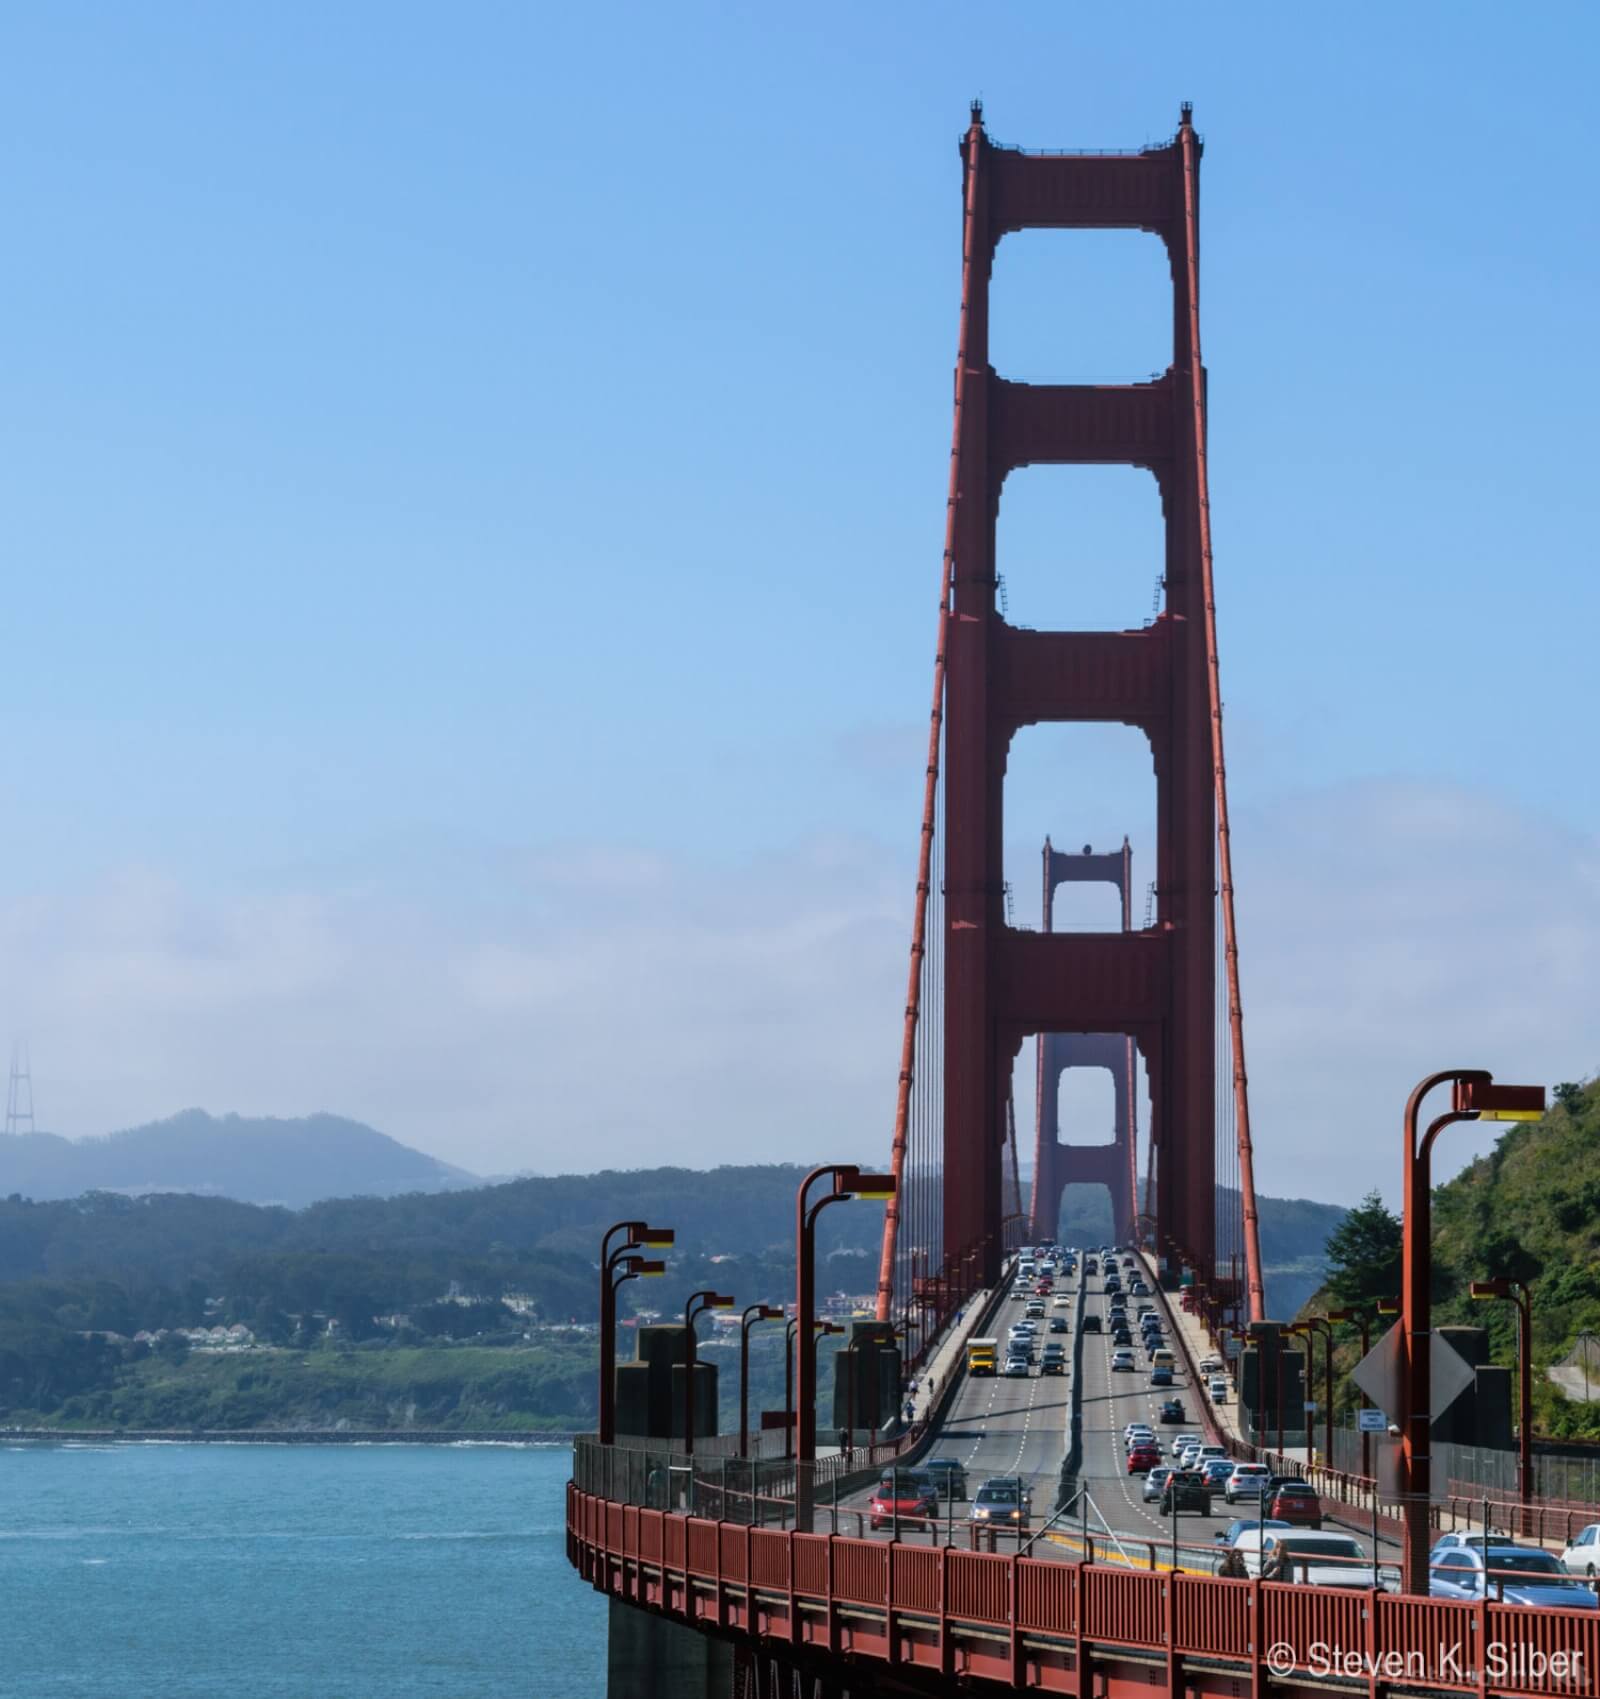 Image of Golden Gate Bridge View Vista Point by Steve Silber